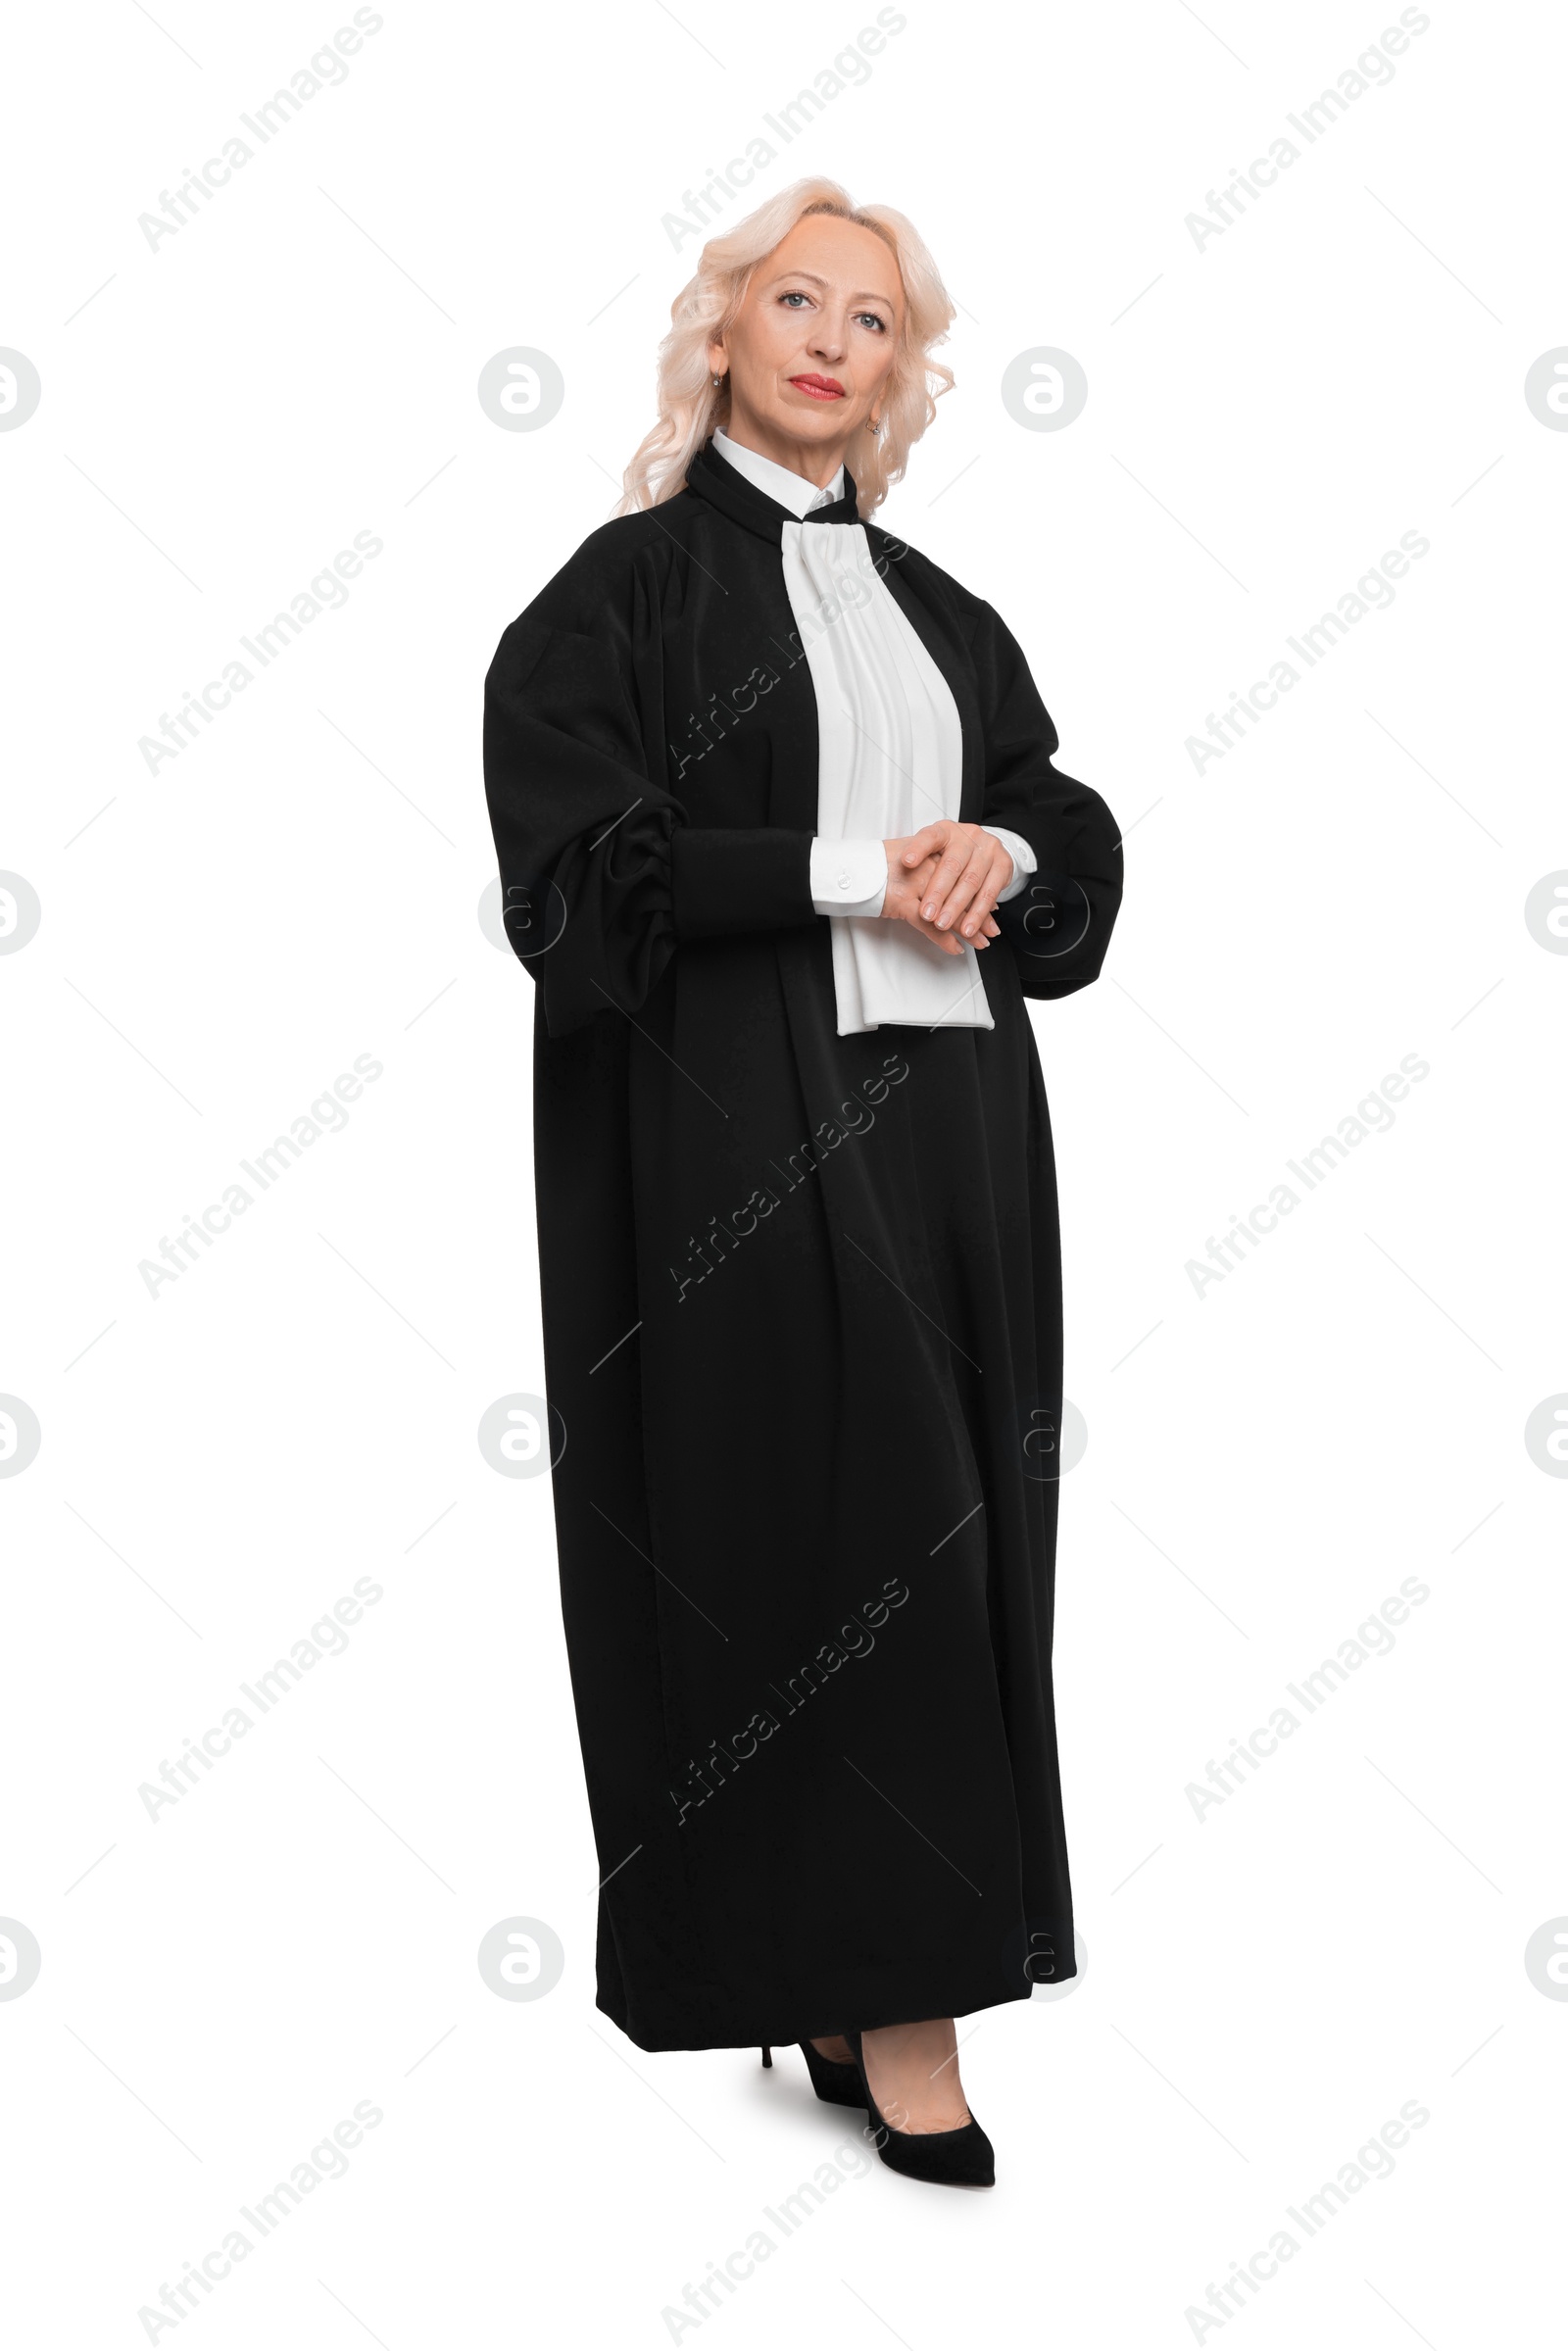 Photo of Senior judge in court dress on white background